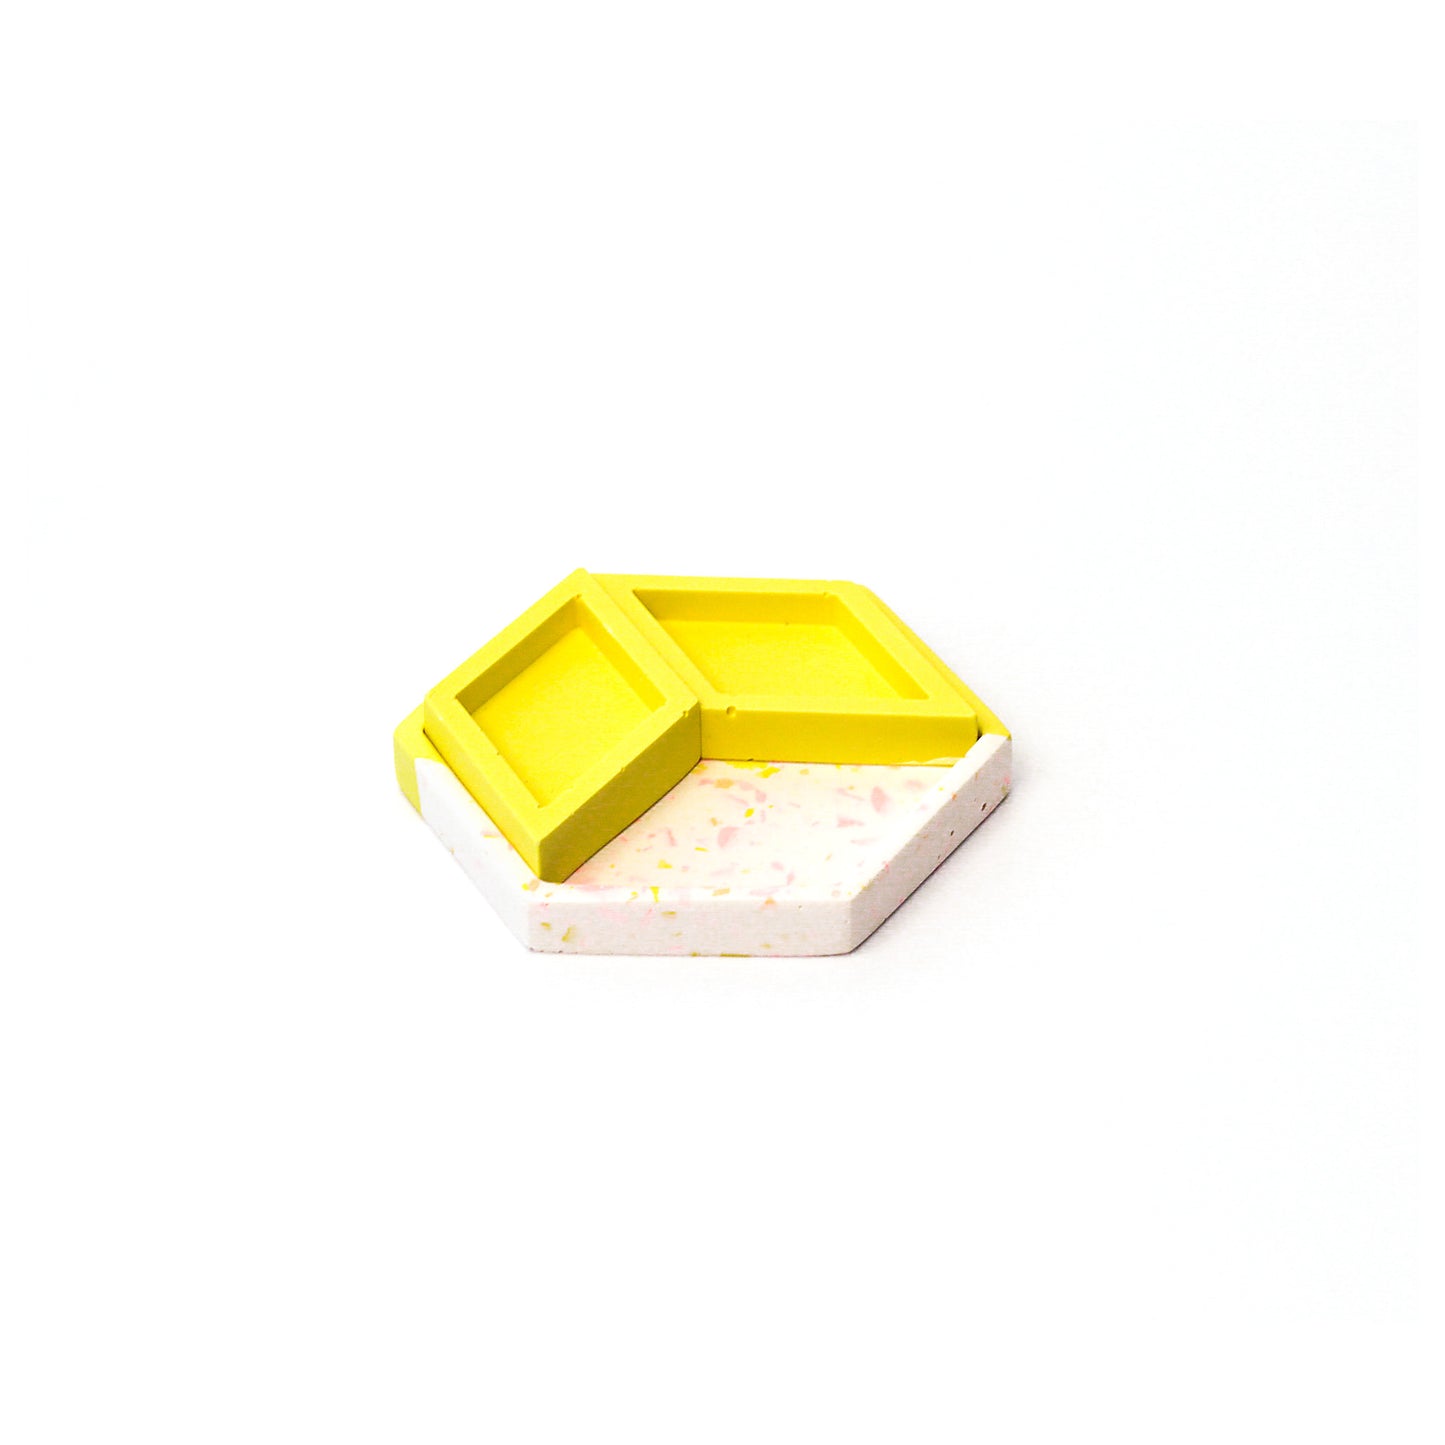 Modular Jewelry Tray